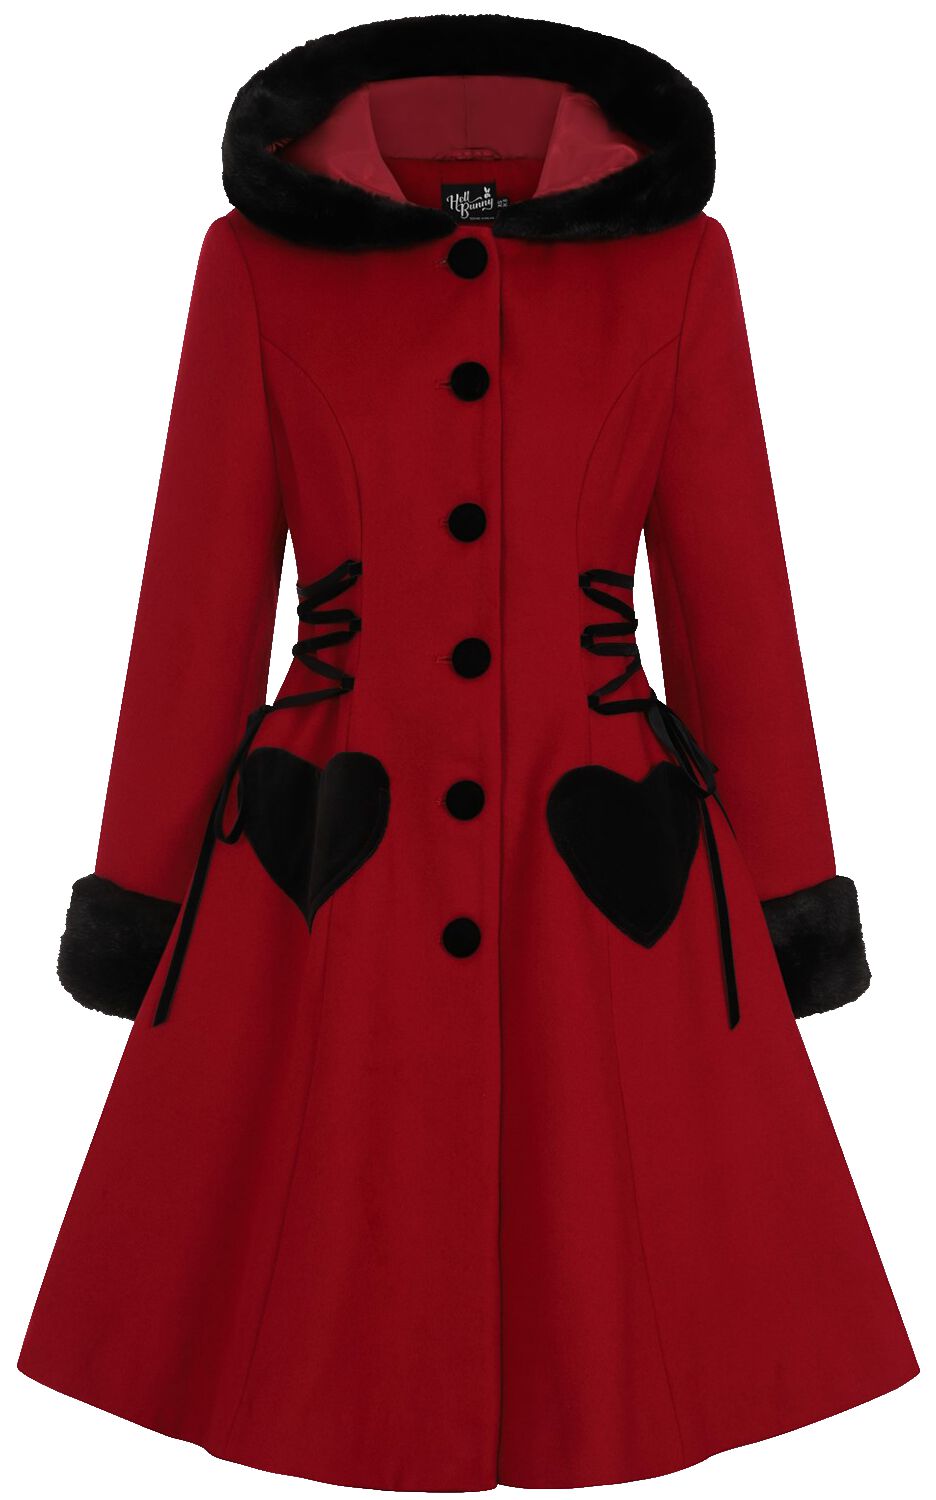 Hell Bunny Scarlett Coat Mantel rot schwarz in XL